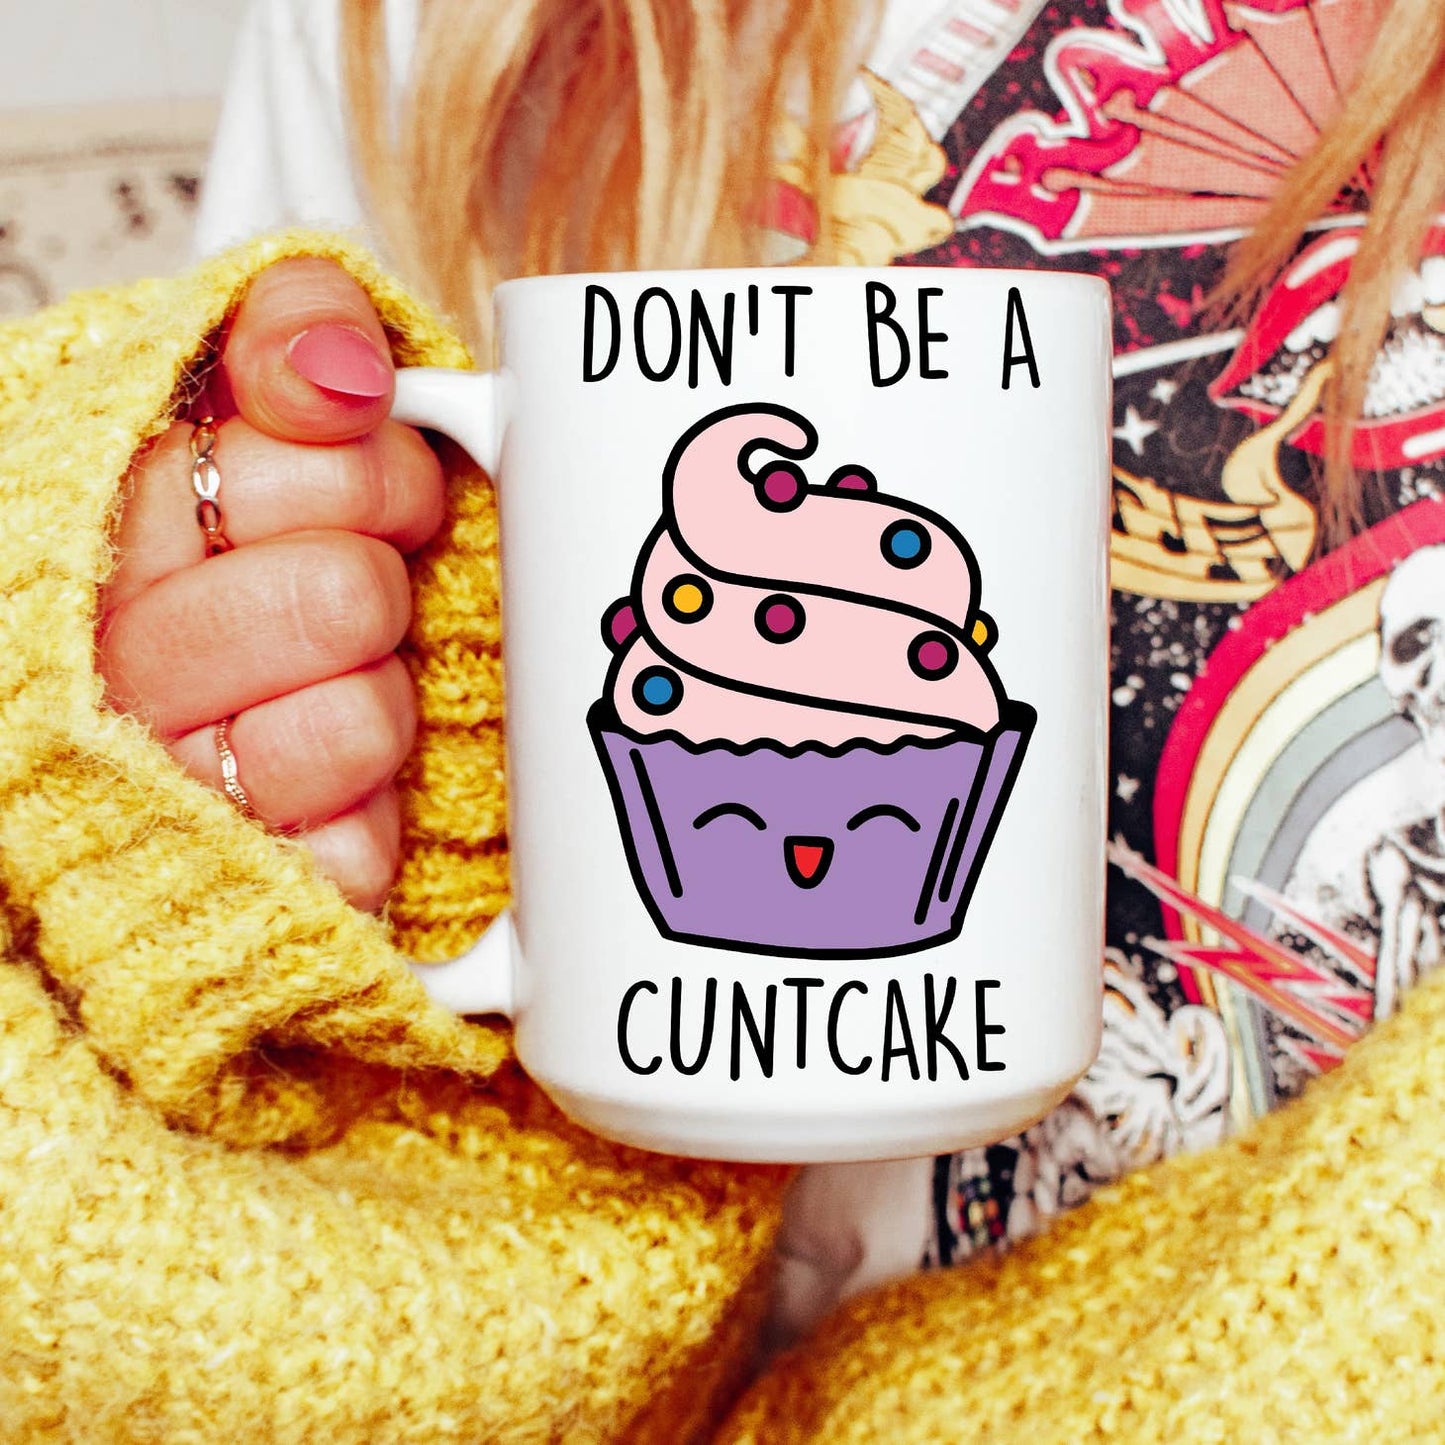 Don’t Be a C*ntcake Cupcake Mug